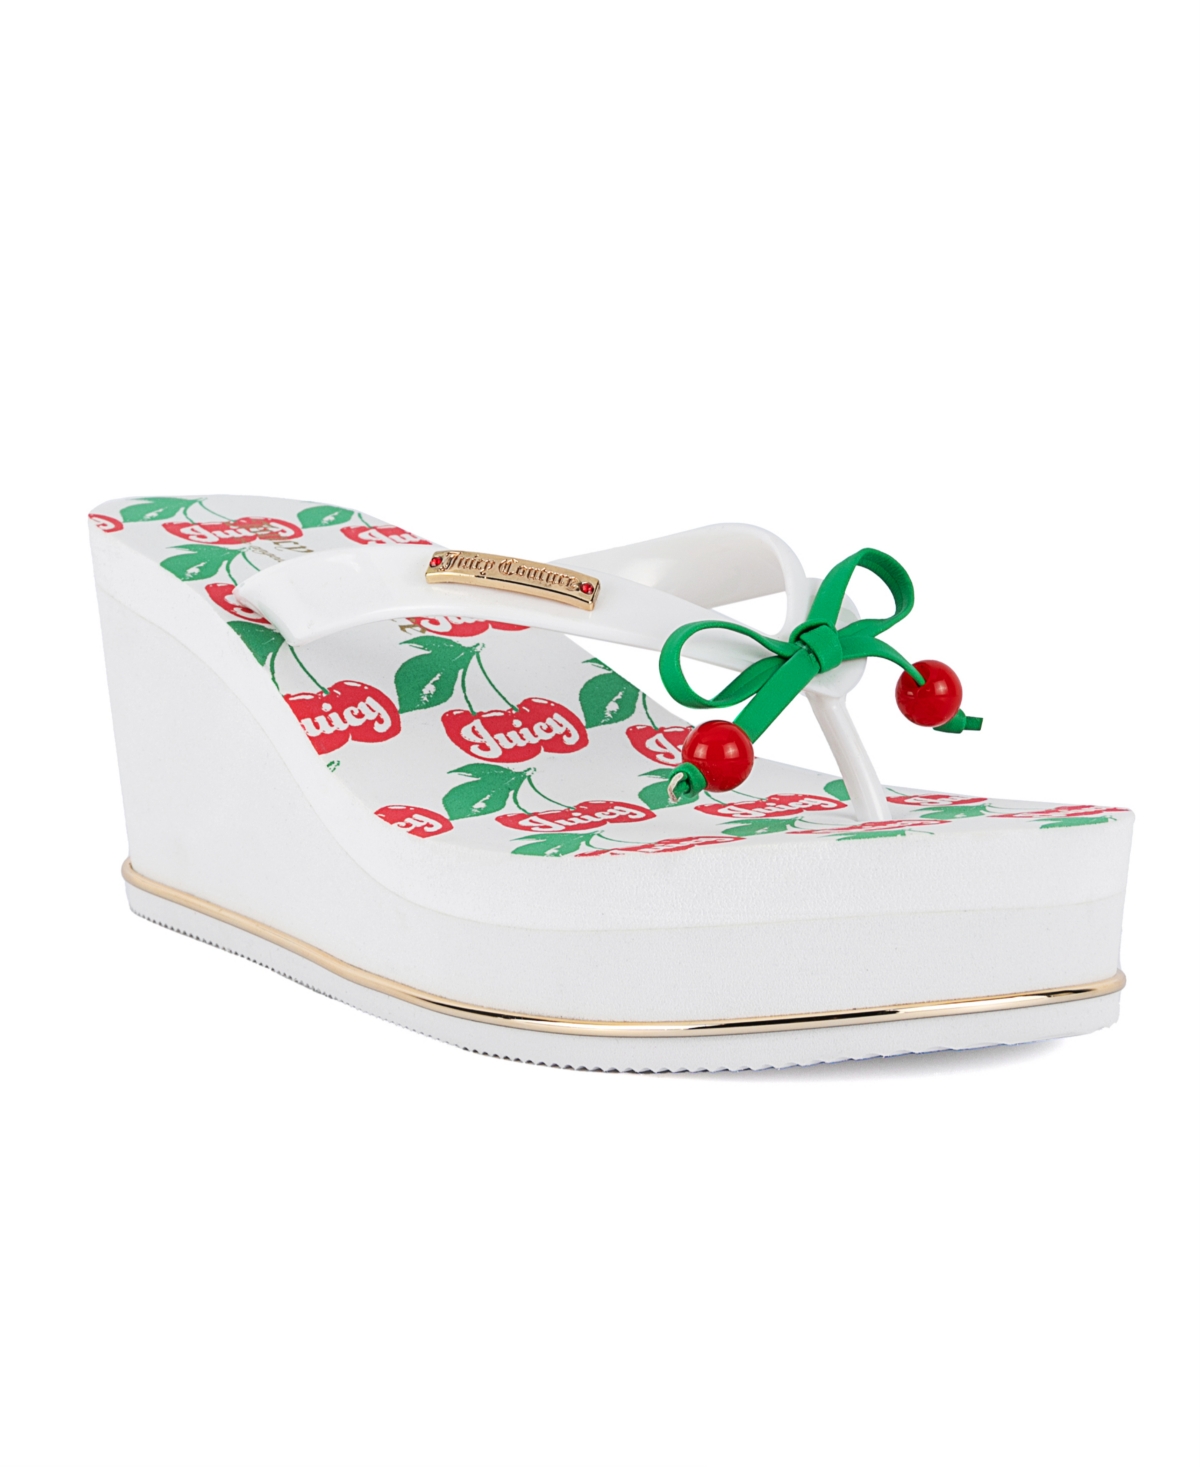 Juicy Couture Women's Umani Cherry Platform Wedge Flip-flop Sandals In White Multi